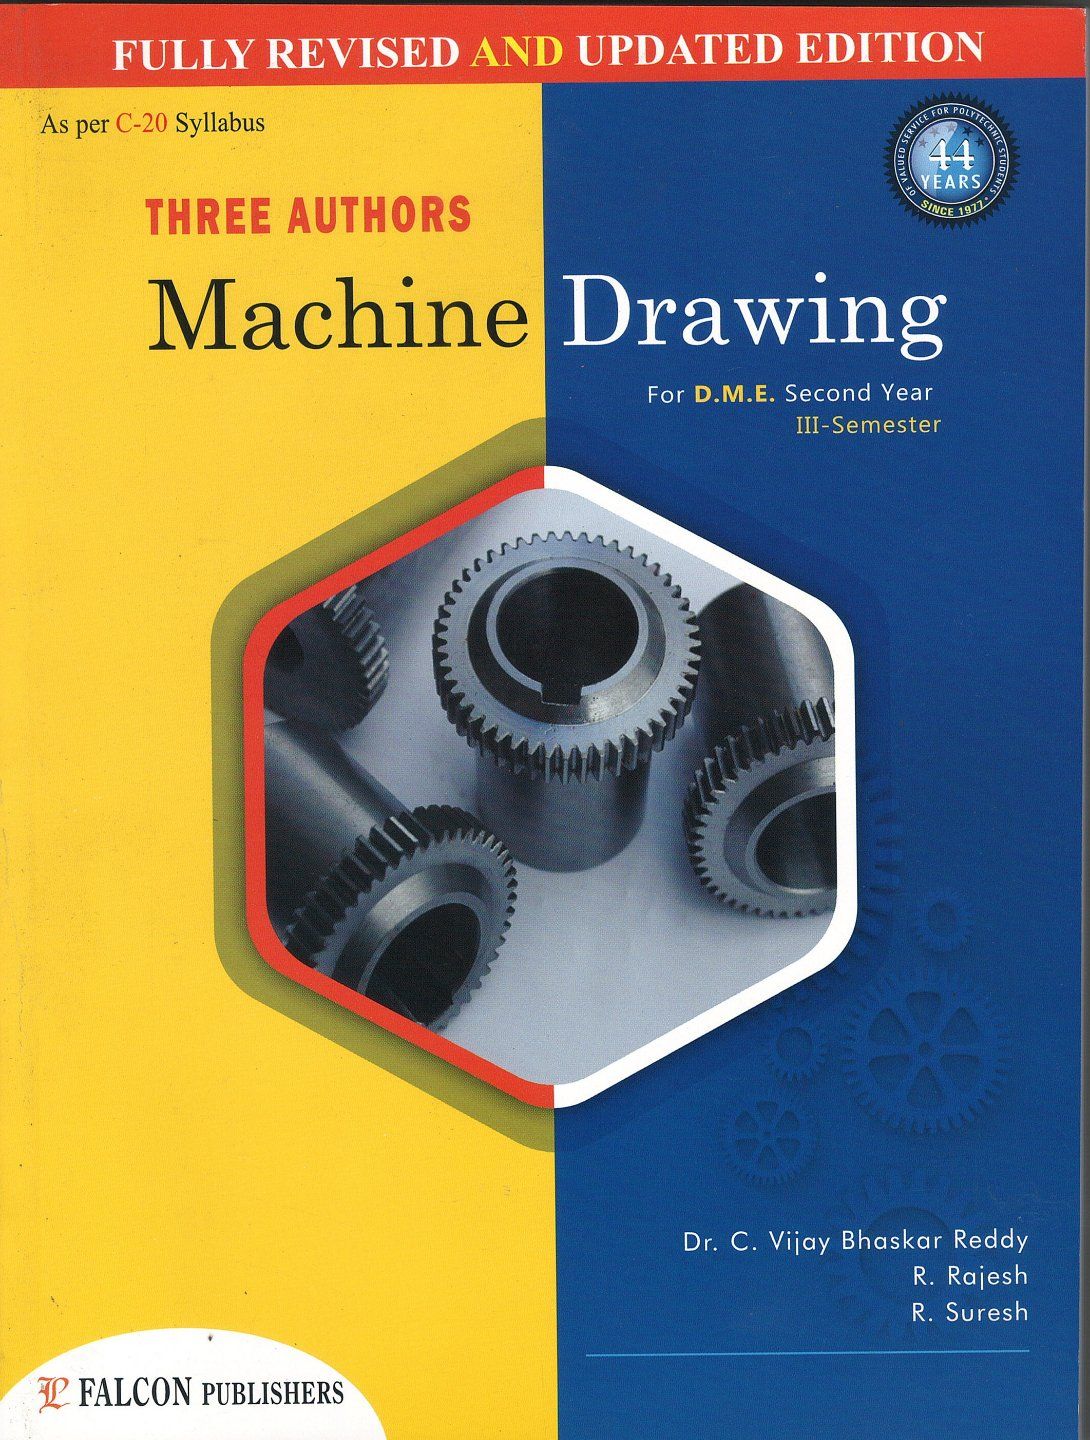 Engineering drawing pdf